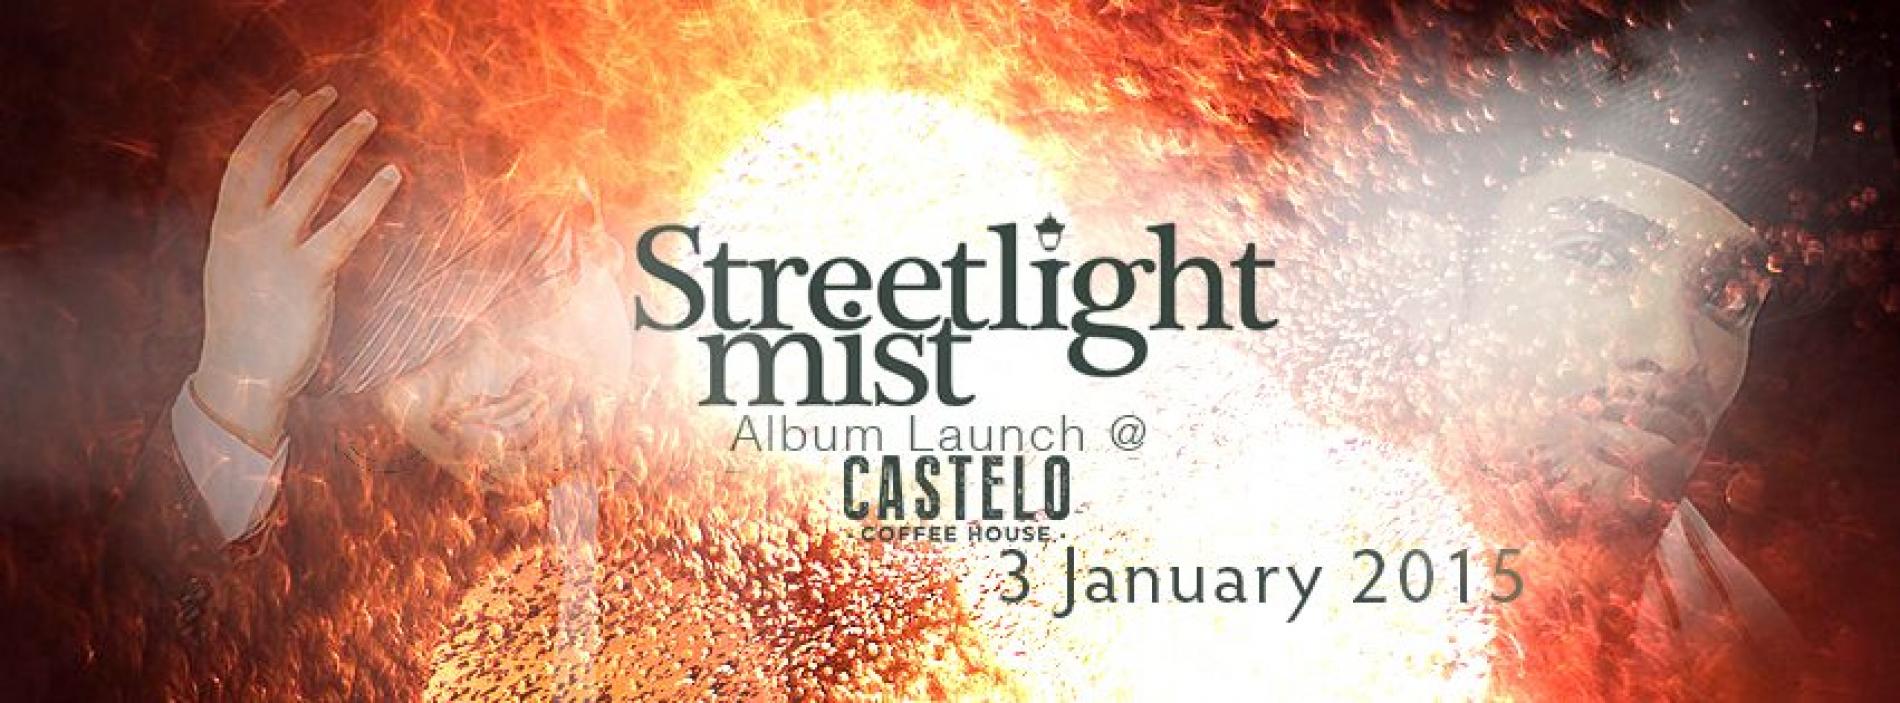 Street Light Mist Album Launch